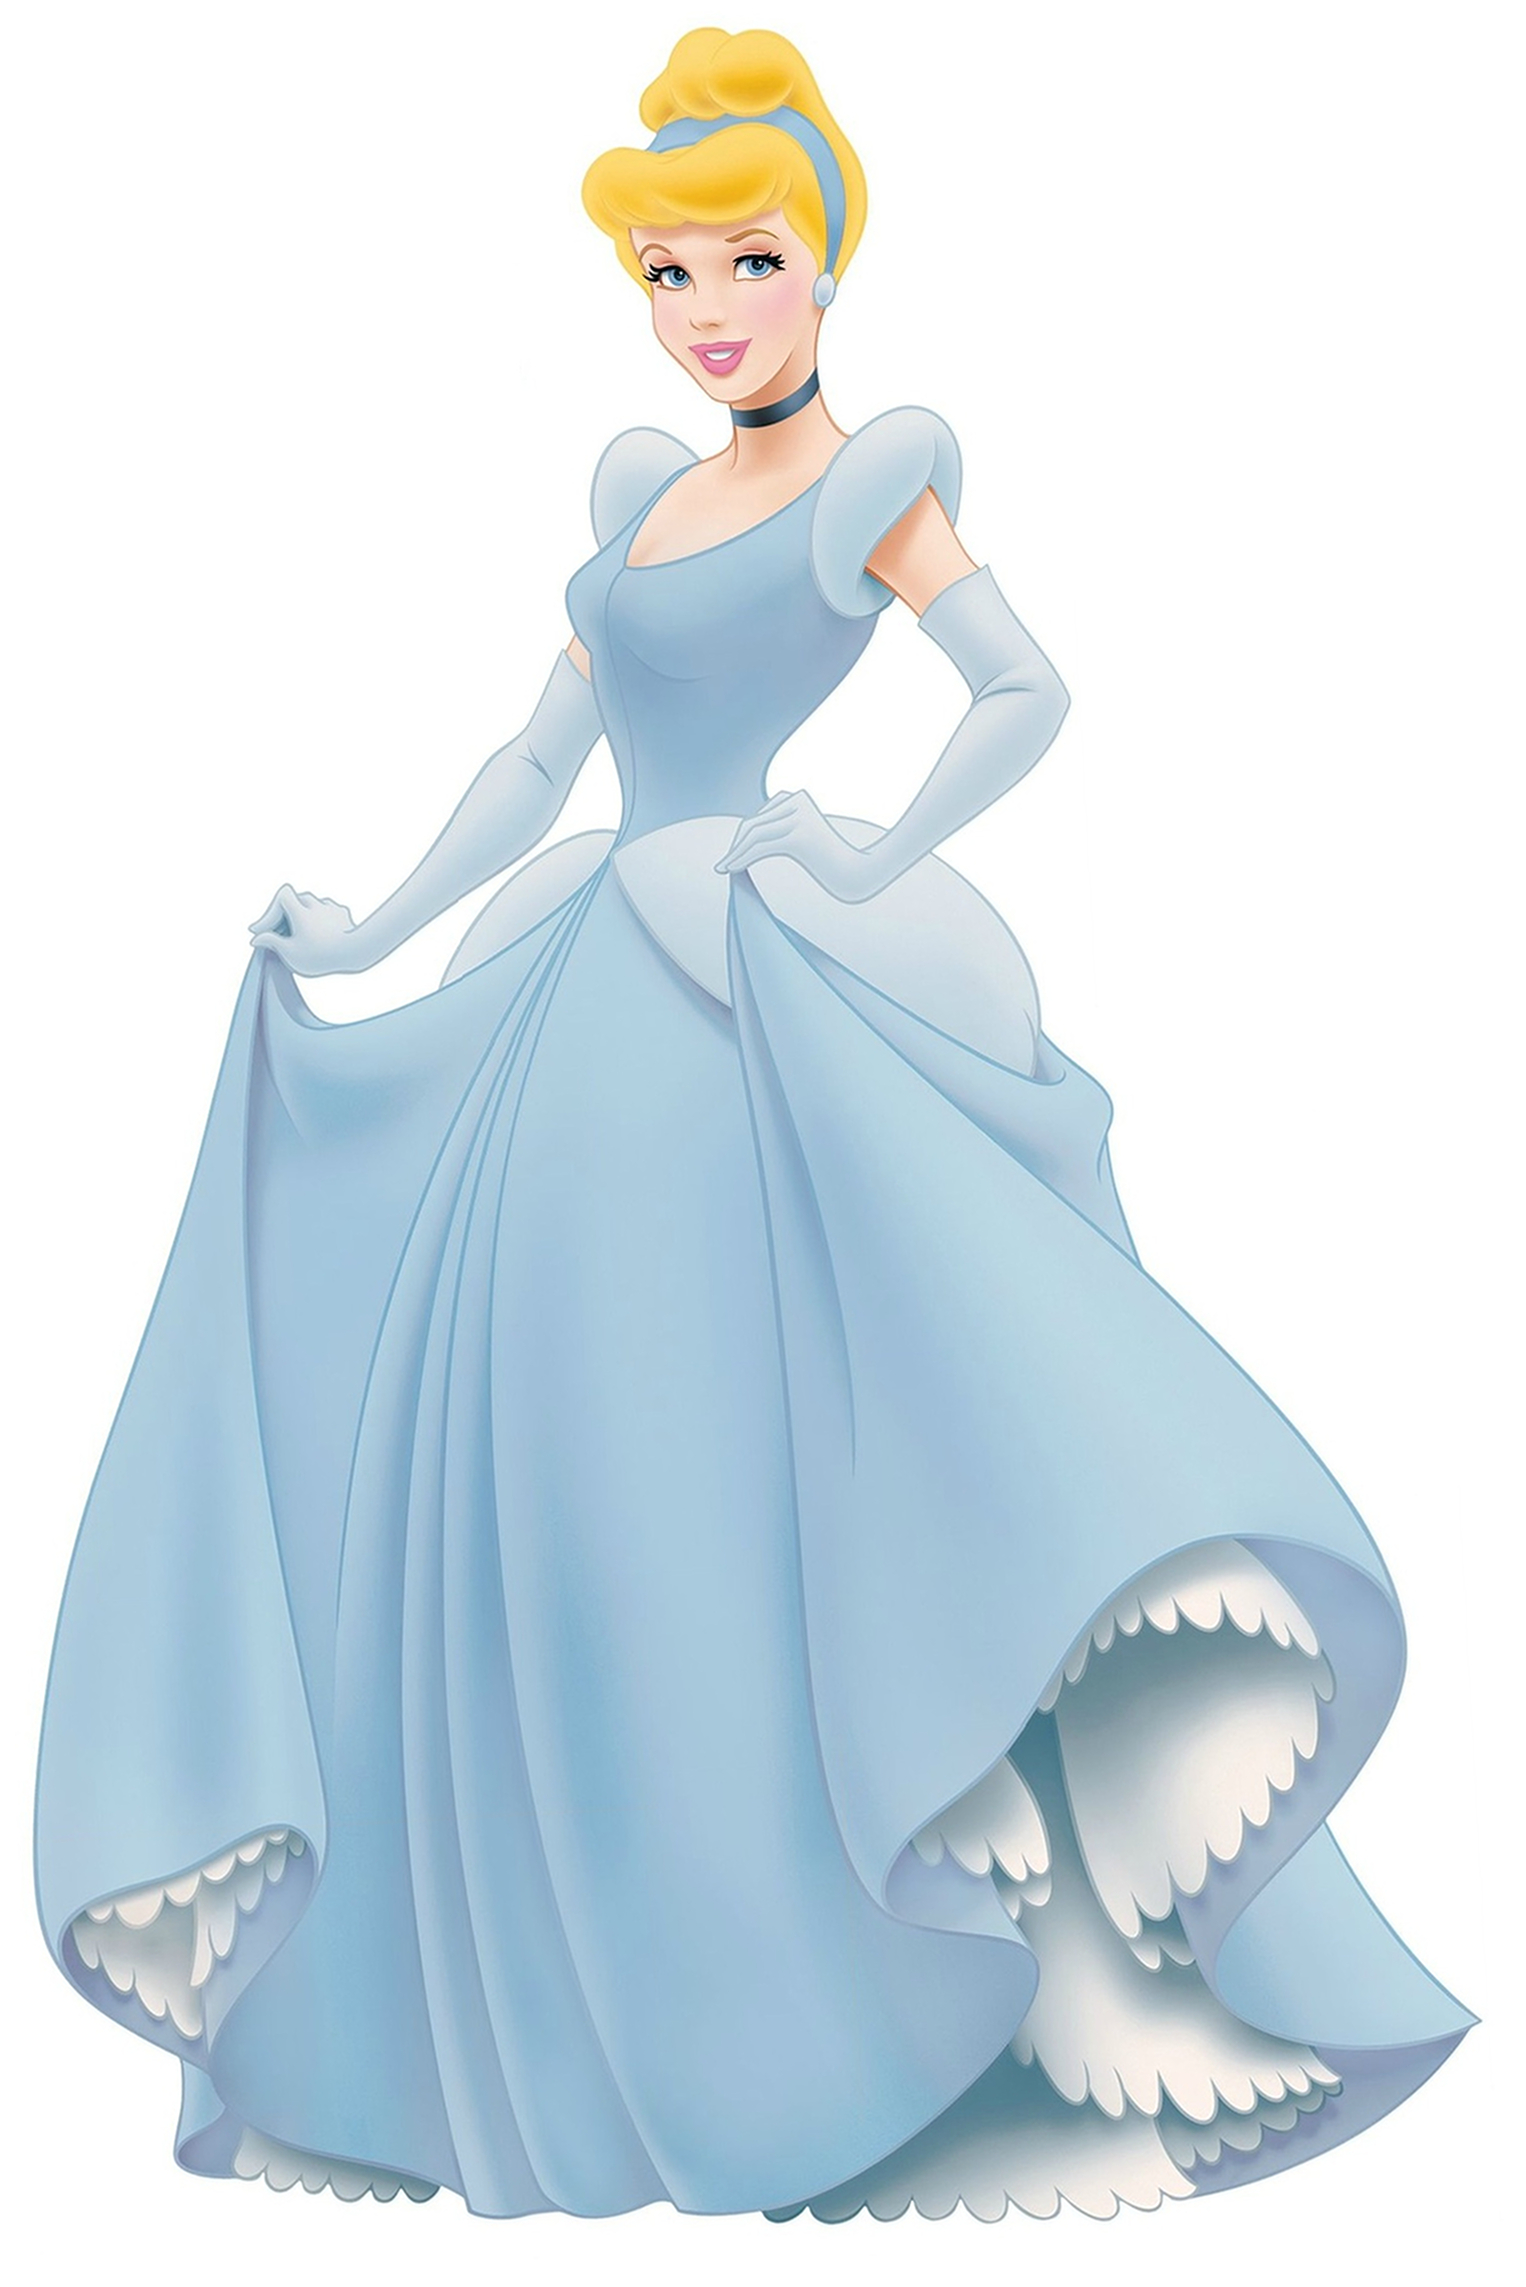 Princess Cinderella   Disney Princess Photo  31871328    Fanpop